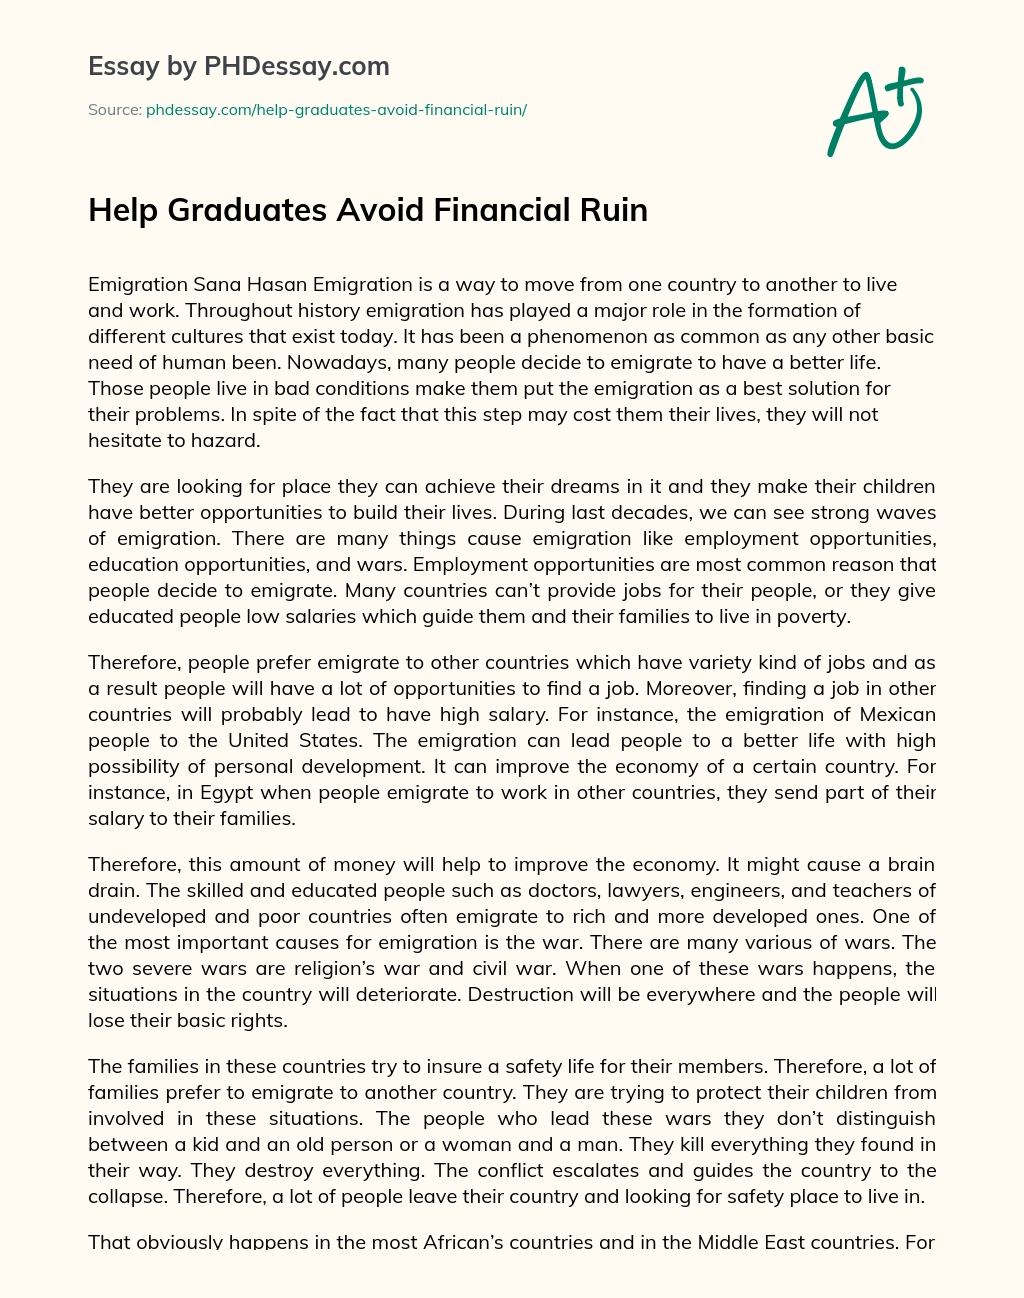 Help Graduates Avoid Financial Ruin essay